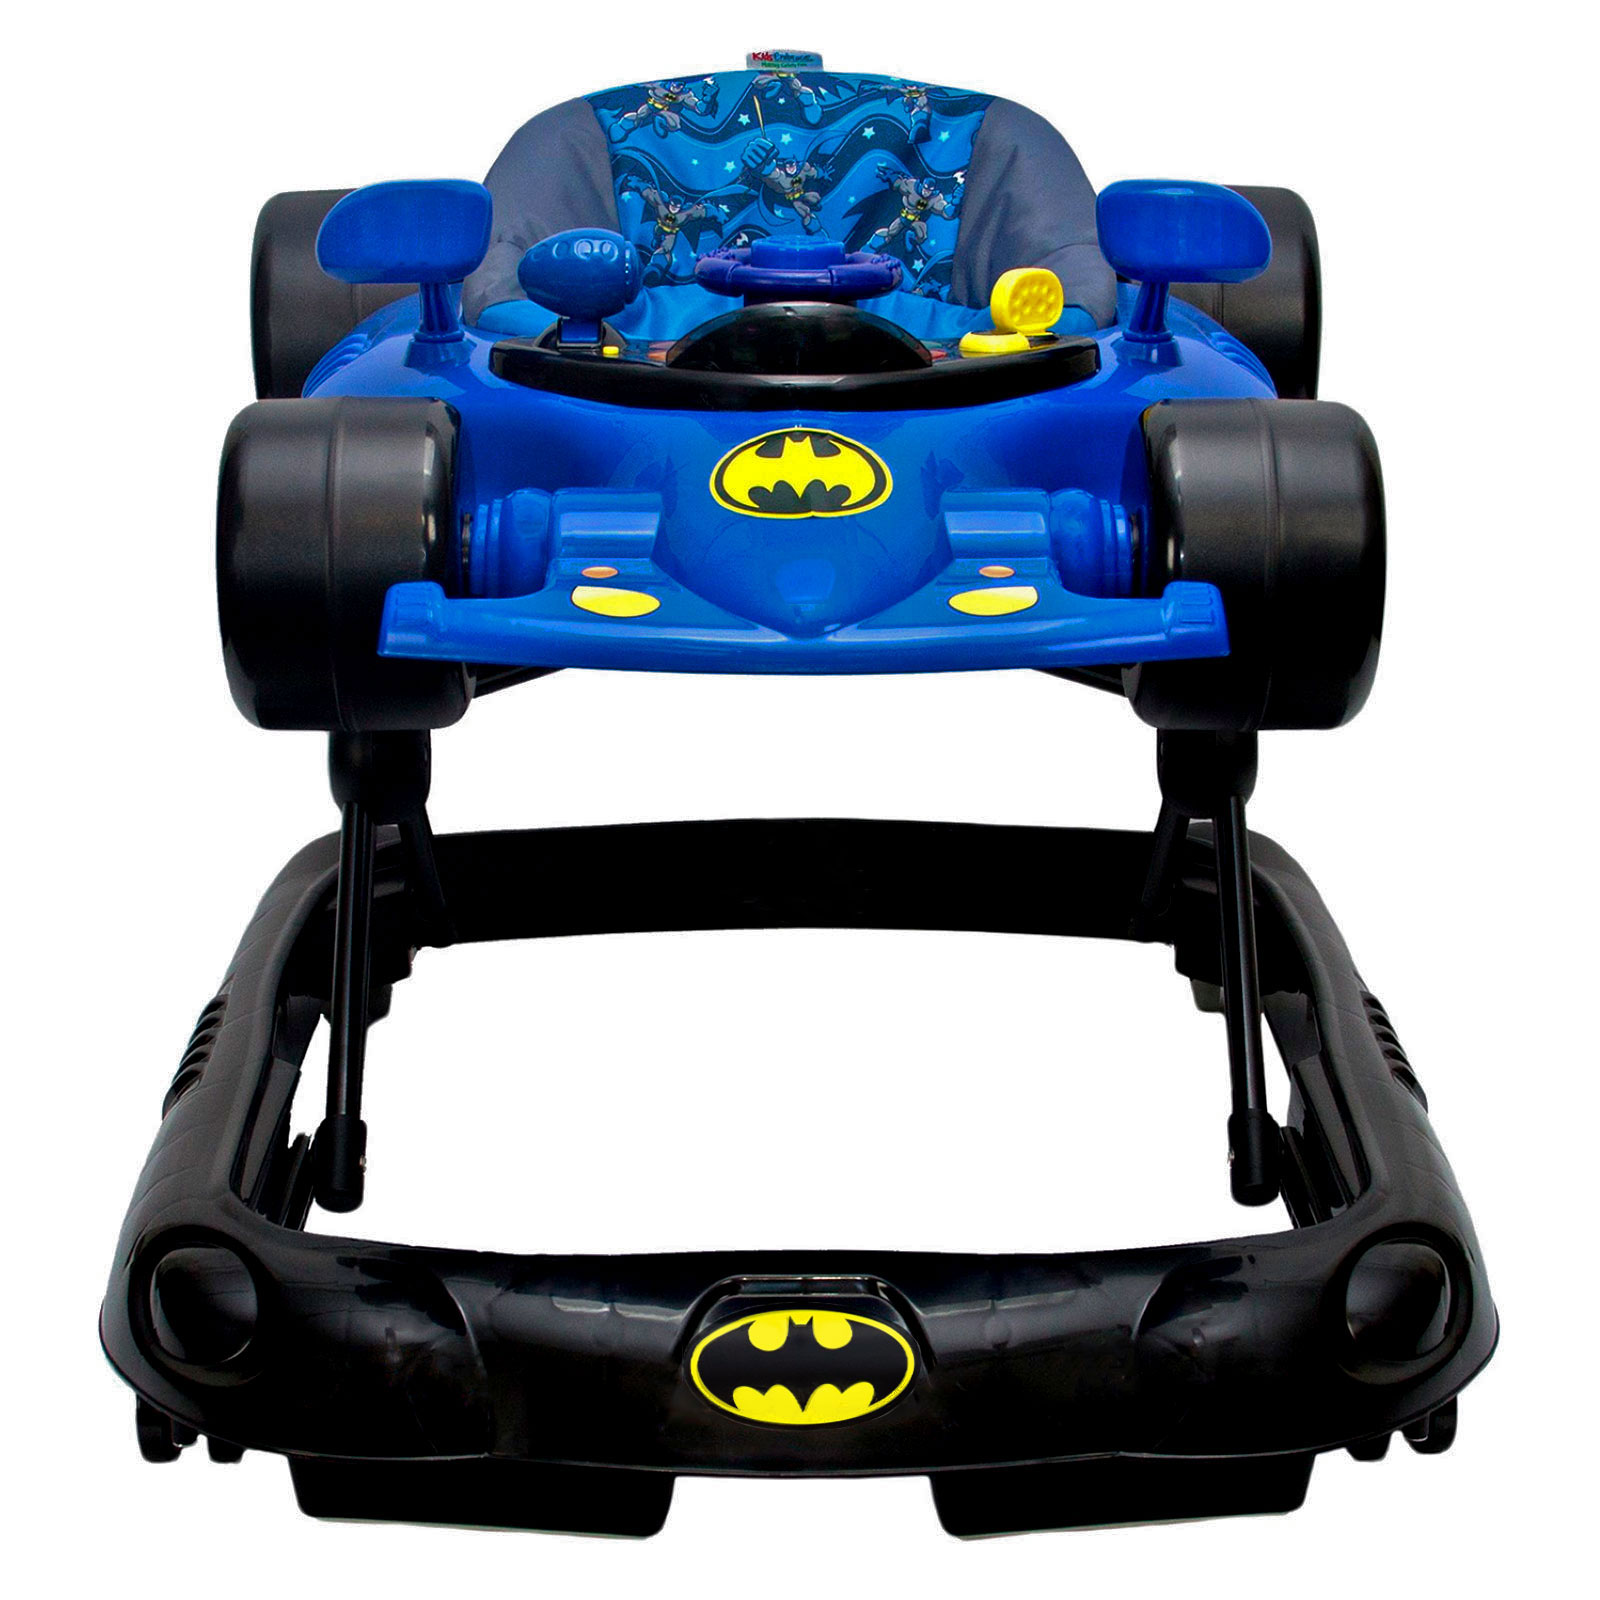 Batman 2in1 Baby Walker with Lights & Sounds - Blue